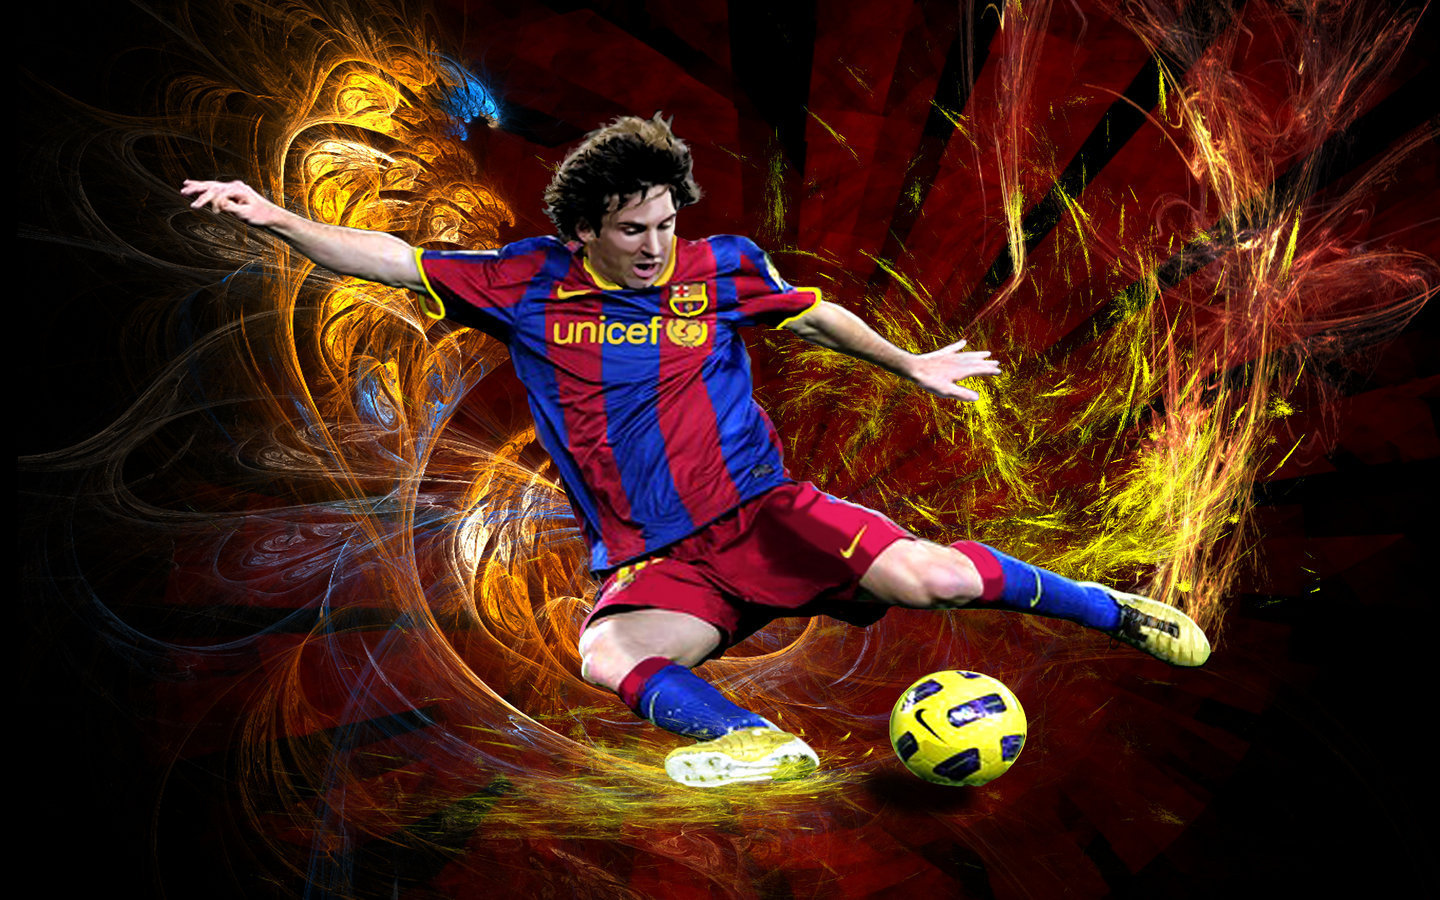 Soccer Wallpaper Messi